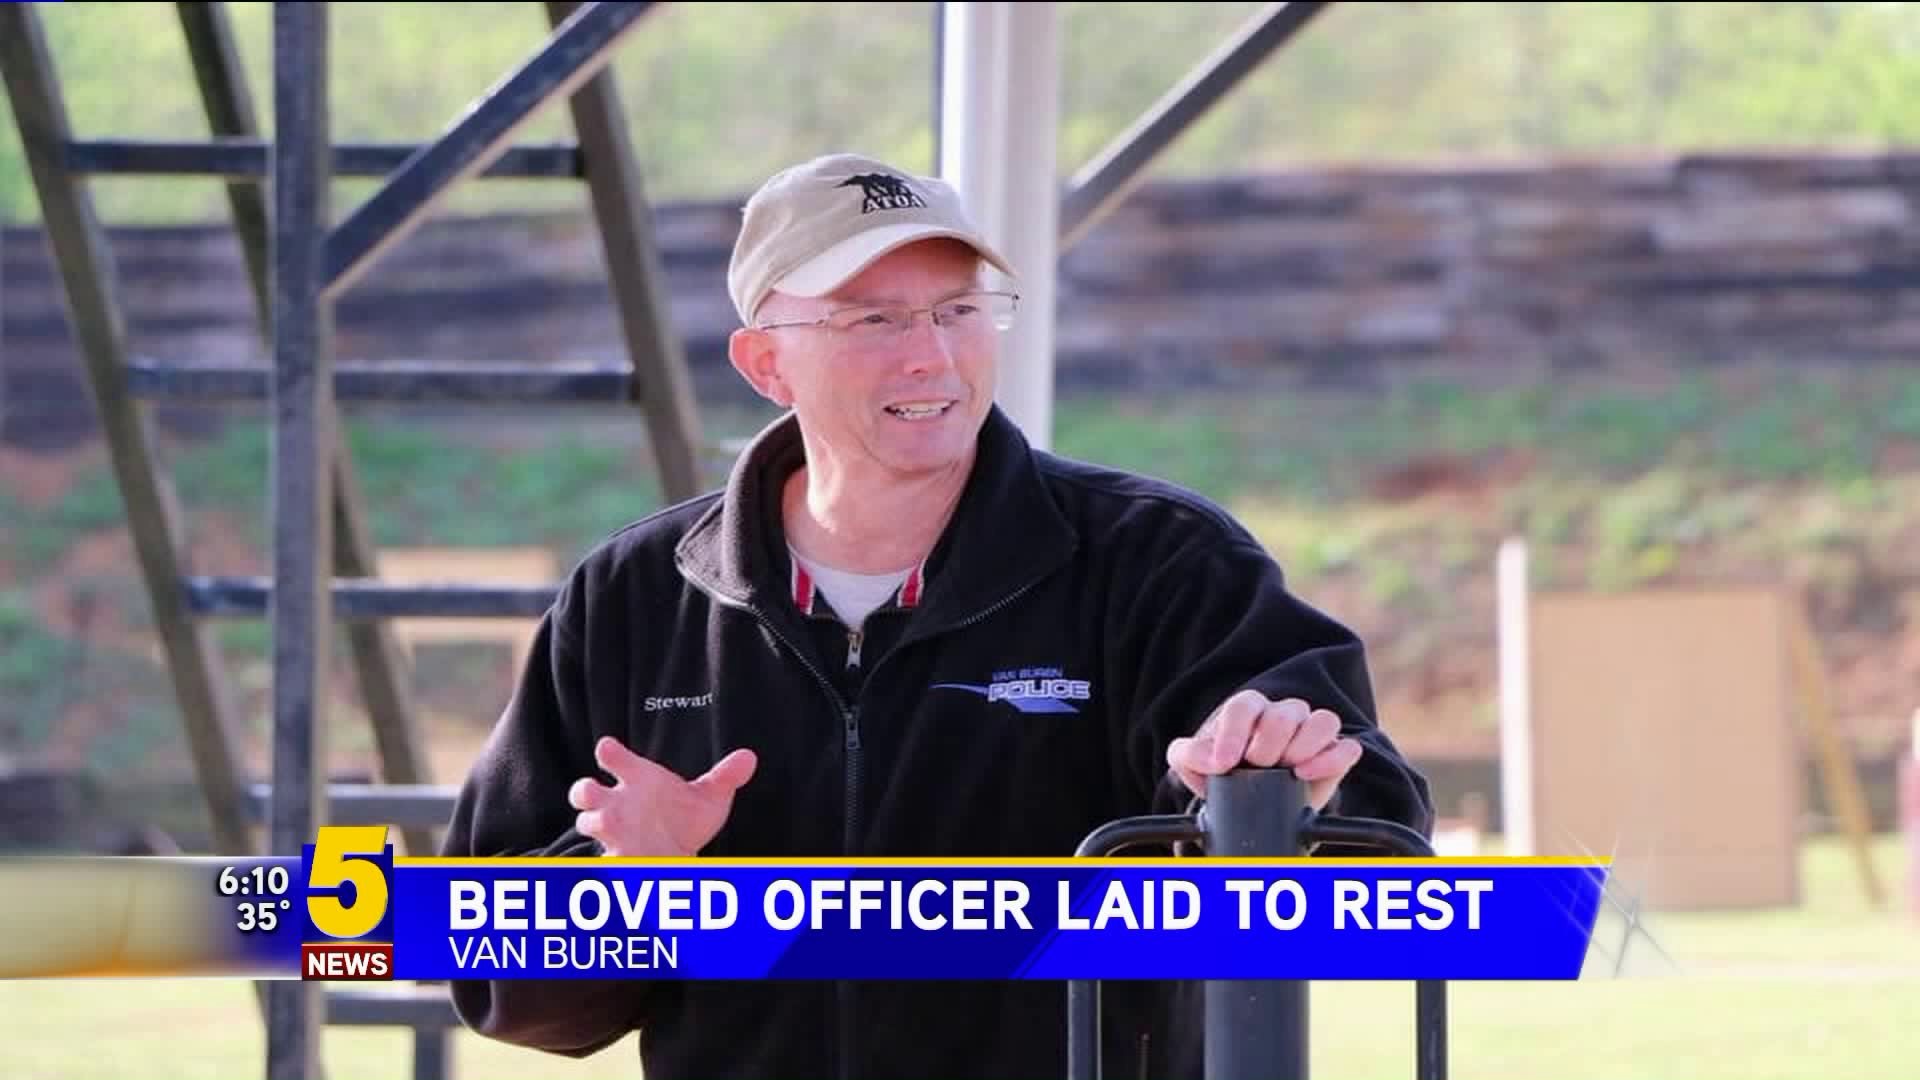 Beloved Officer Laid To Rest In Van Buren